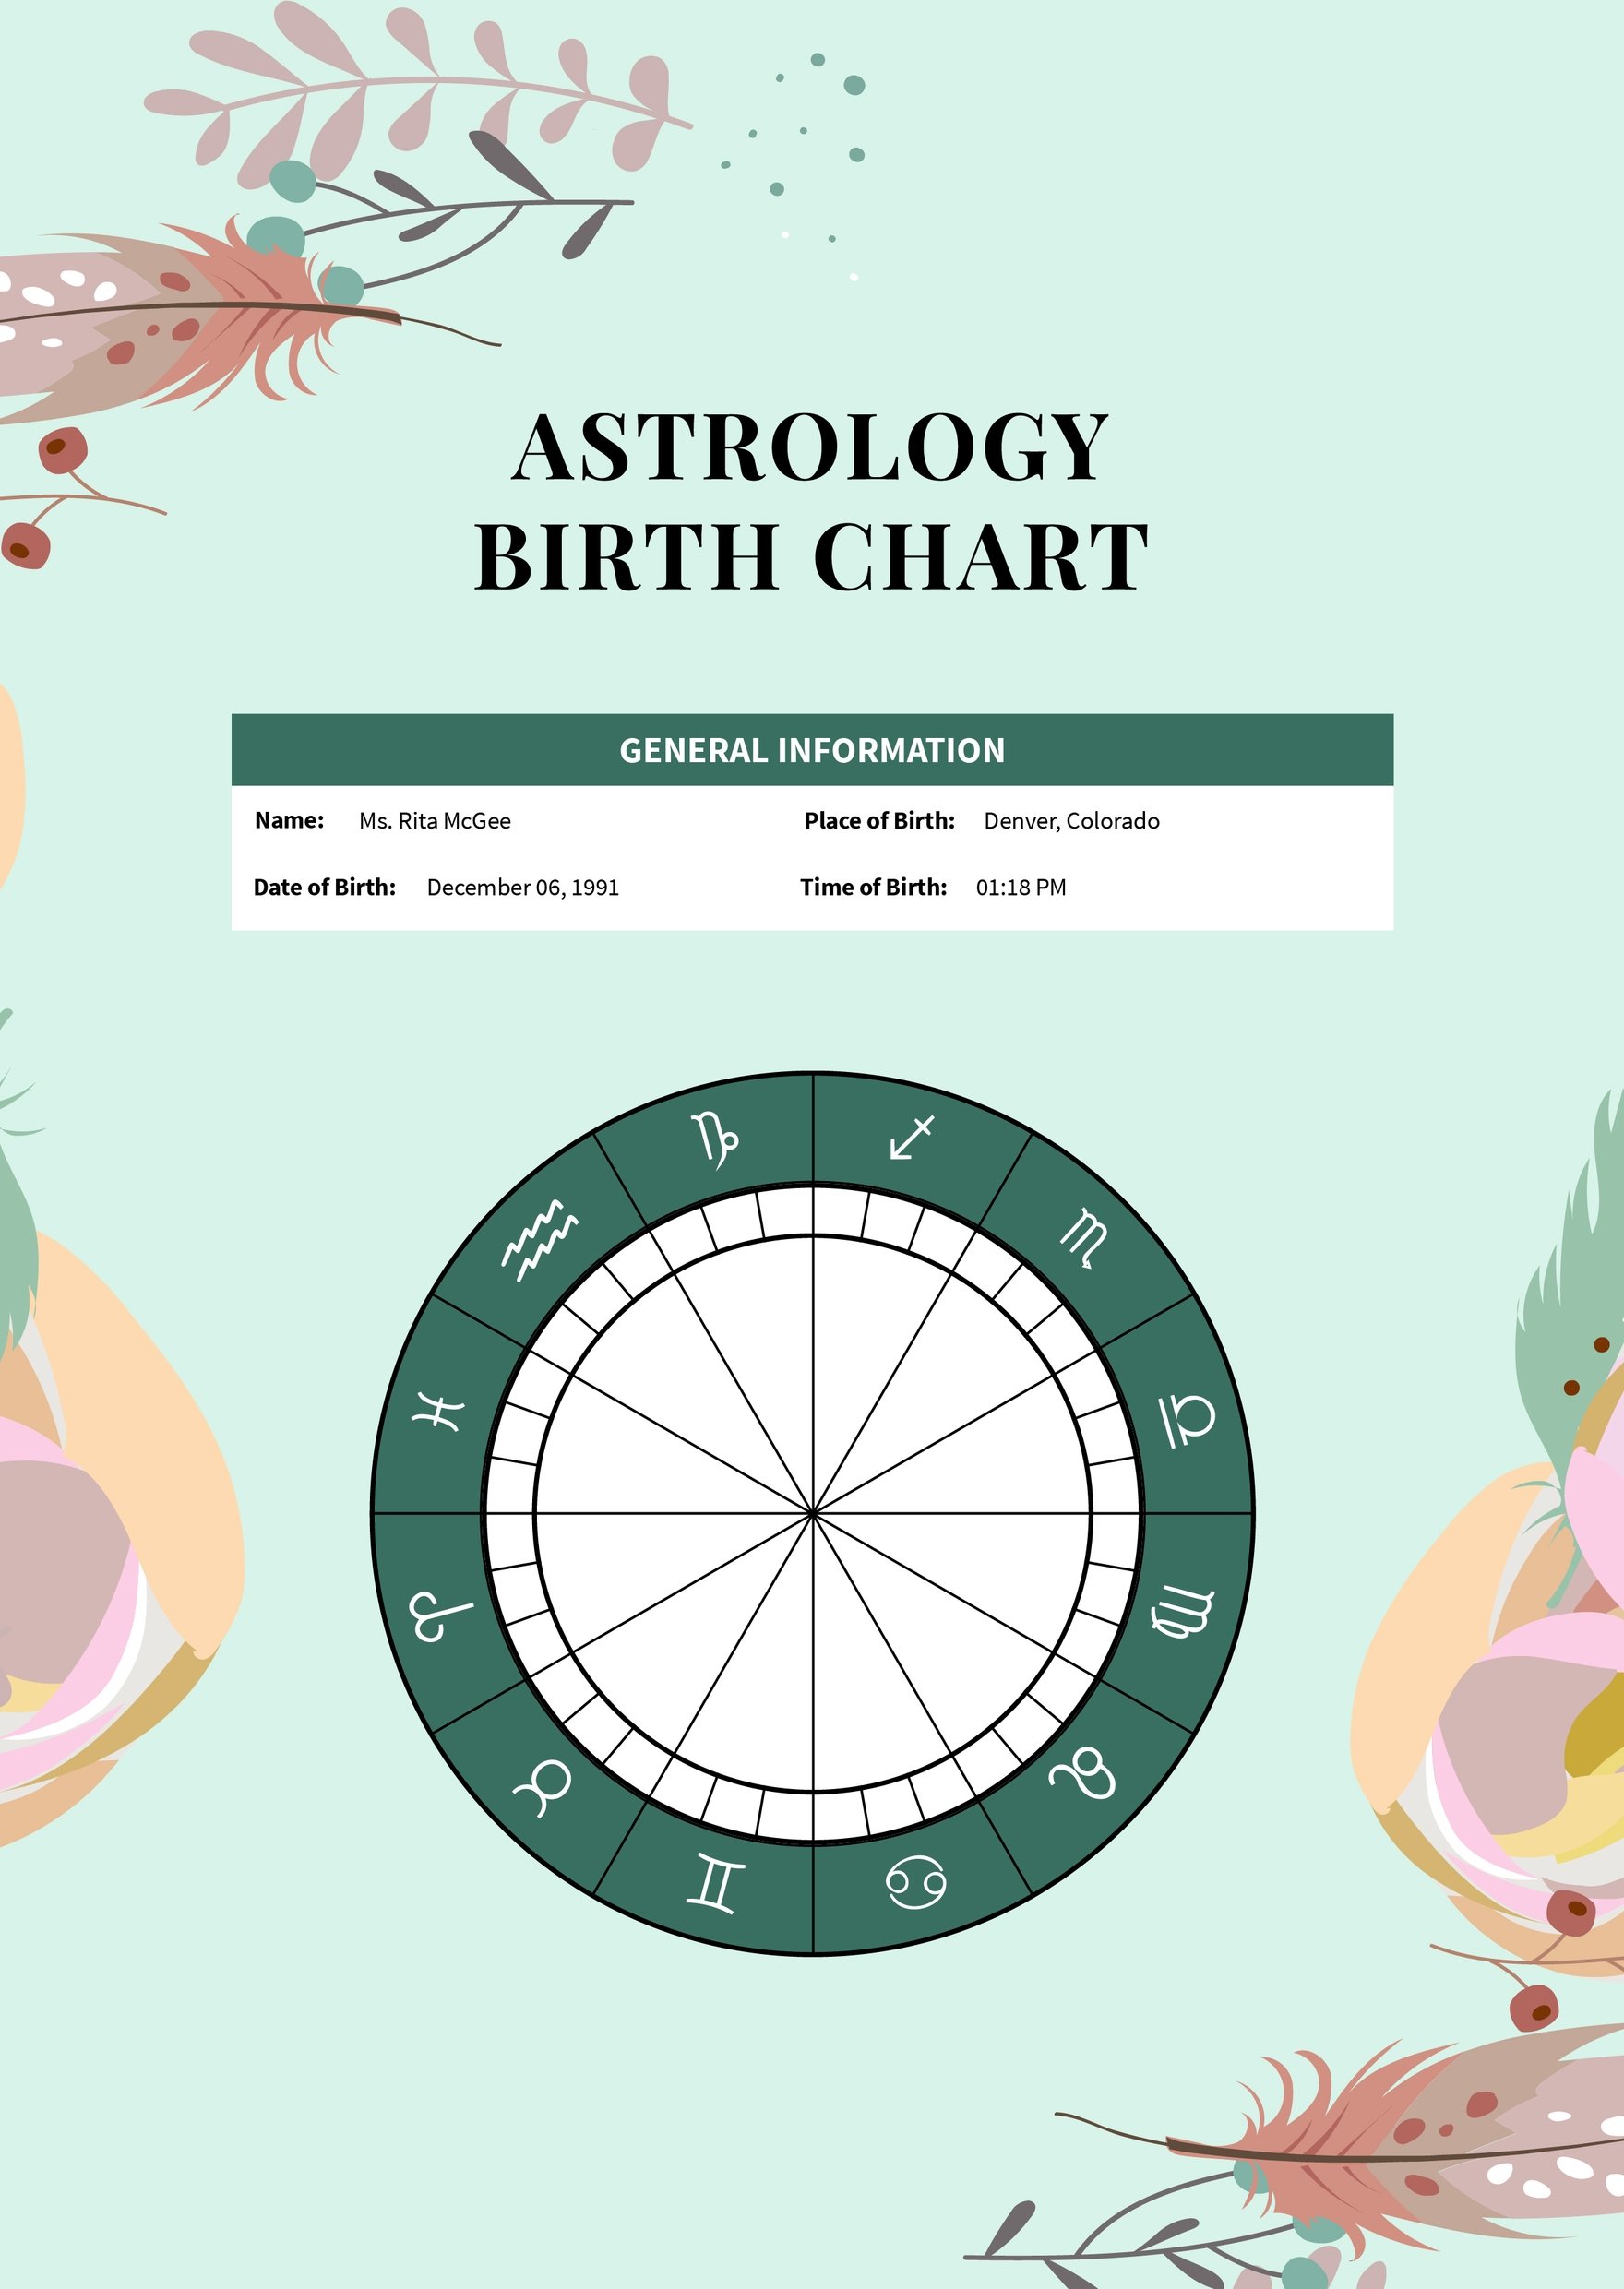 Astrology Birth Chart Template in PDF, Illustrator